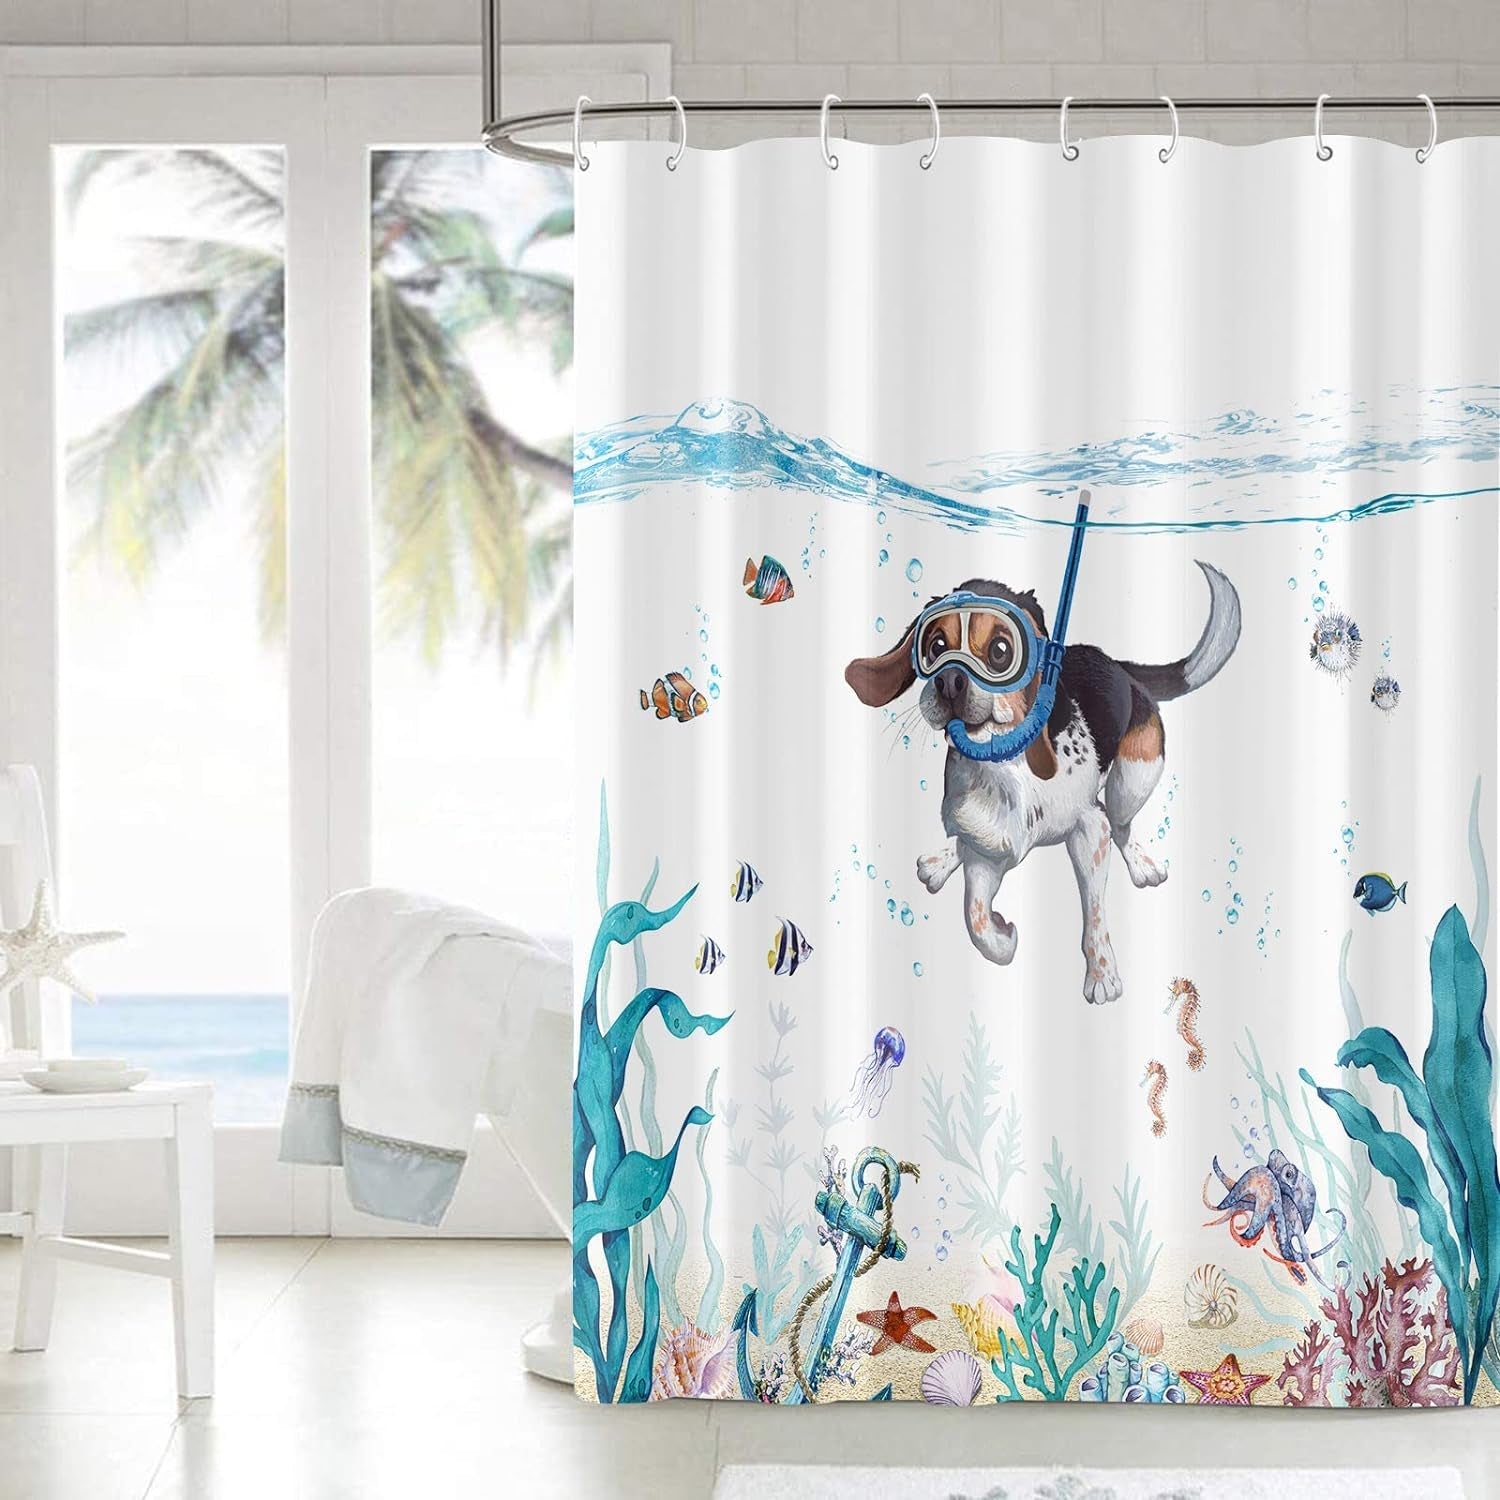 Funny Dog Shower Curtain Teal Blue Sea Ocean Waterproof Fabric Shower Curtains for Bathroom with Animal Octopus Starfish Turtle Anchor Fish Nautical Bathroom Curtain (Dog)